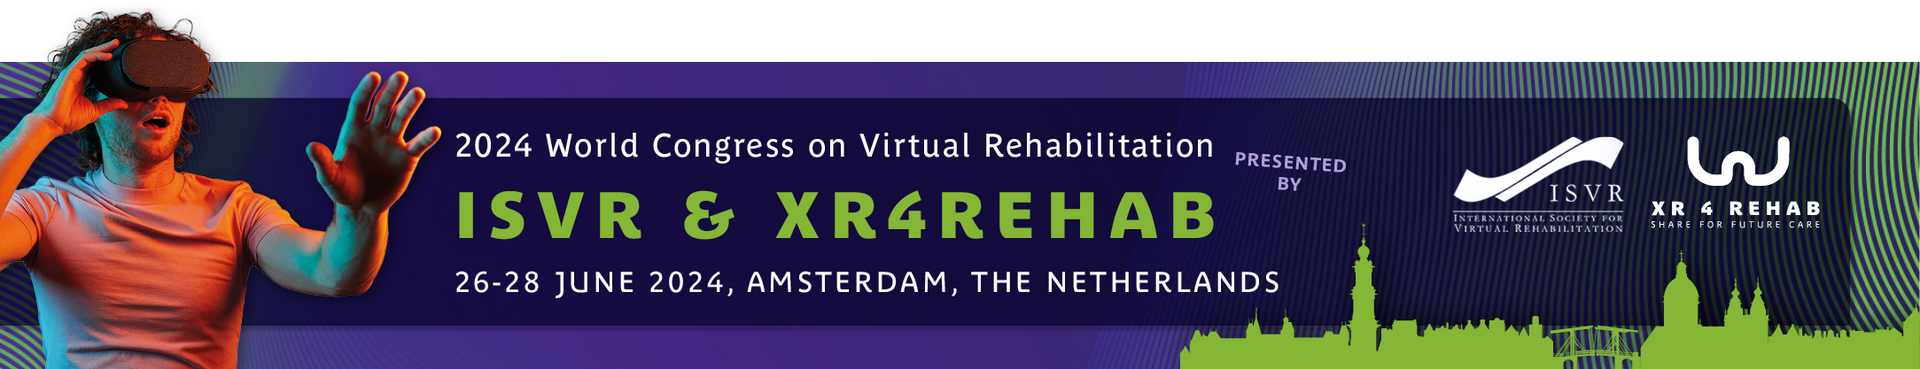 2024 World Congress on Virtual Rehabilitation